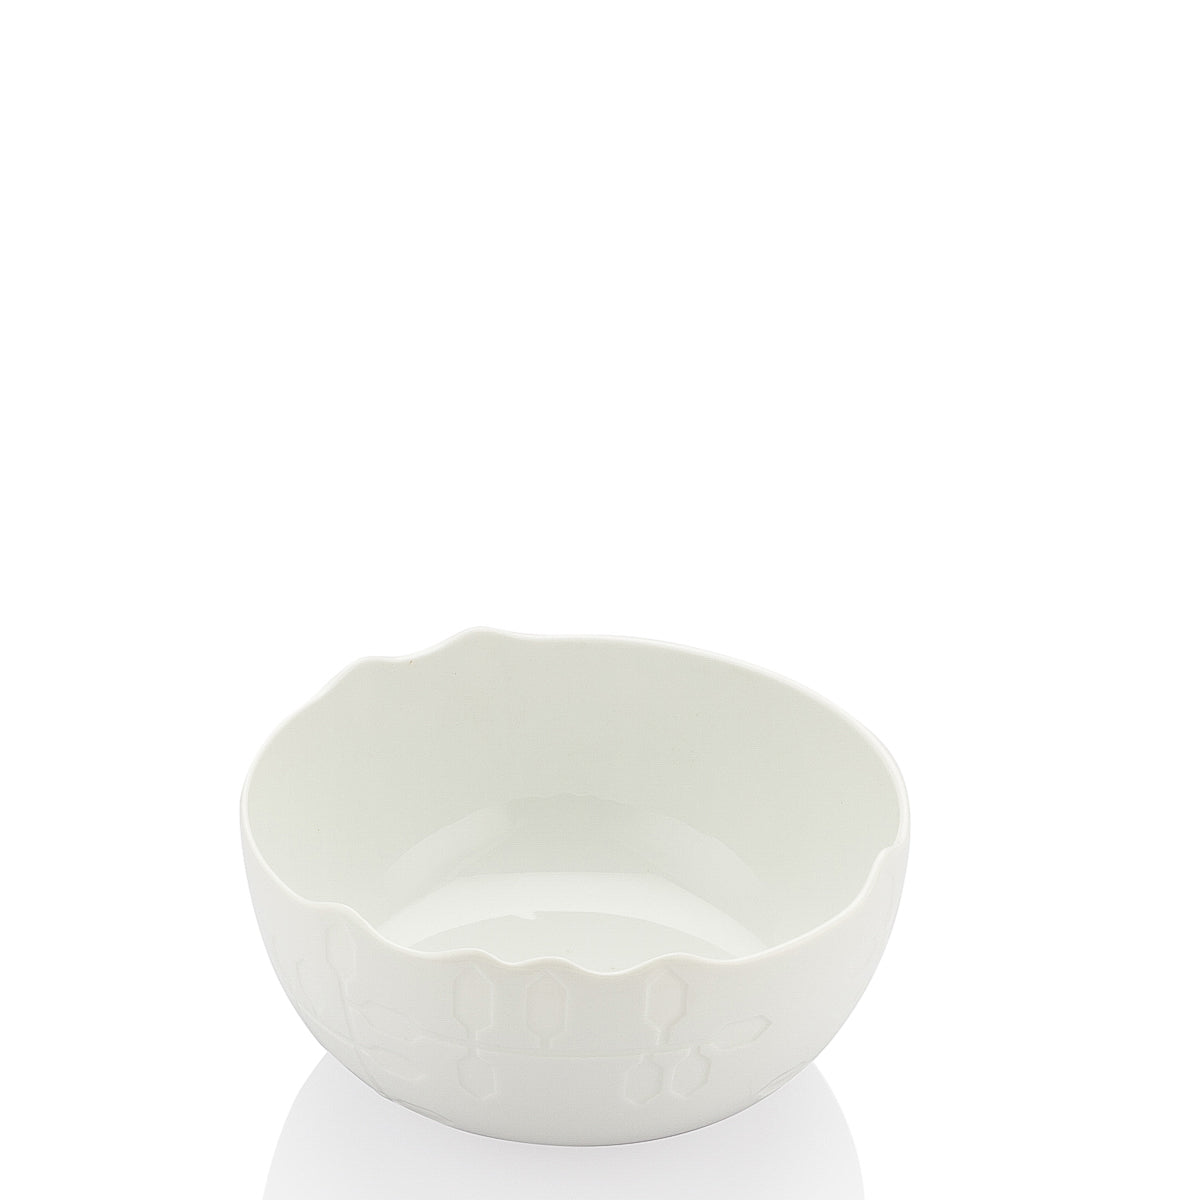 Rosenthal White Weiss Ceramic Serving Bowl